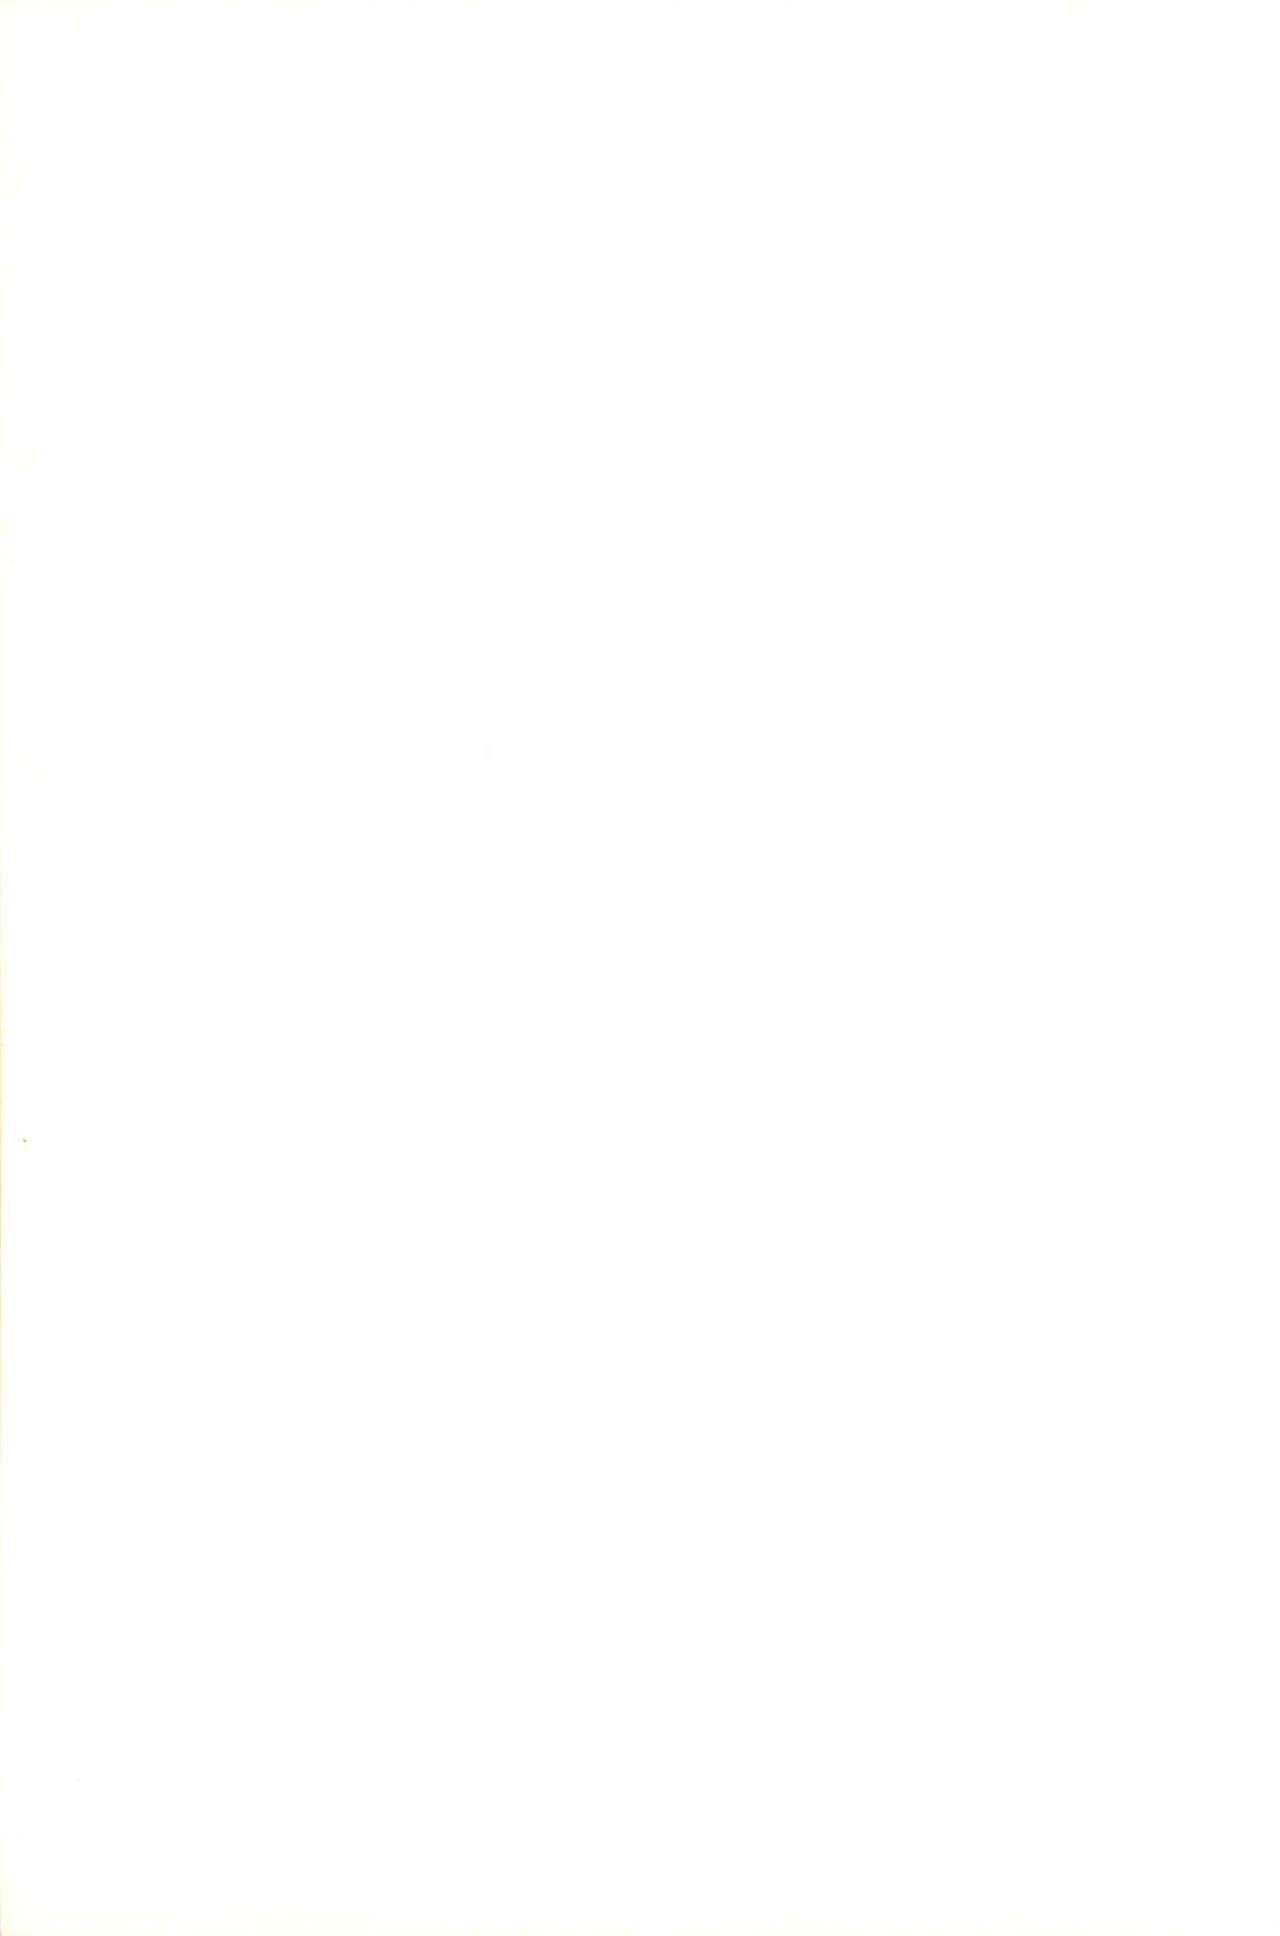 Shaking ND-special Volume 1 - Bakusou kyoudai lets and go G gundam Saint tail Nurse angel ririka sos Gundam x Umihara kawase Gaogaigar | yuusha ou gaogaigar Sailor moon | bishoujo senshi sailor moon Yat space travel agency | yat anshin uchuu ryokou T - Page 143